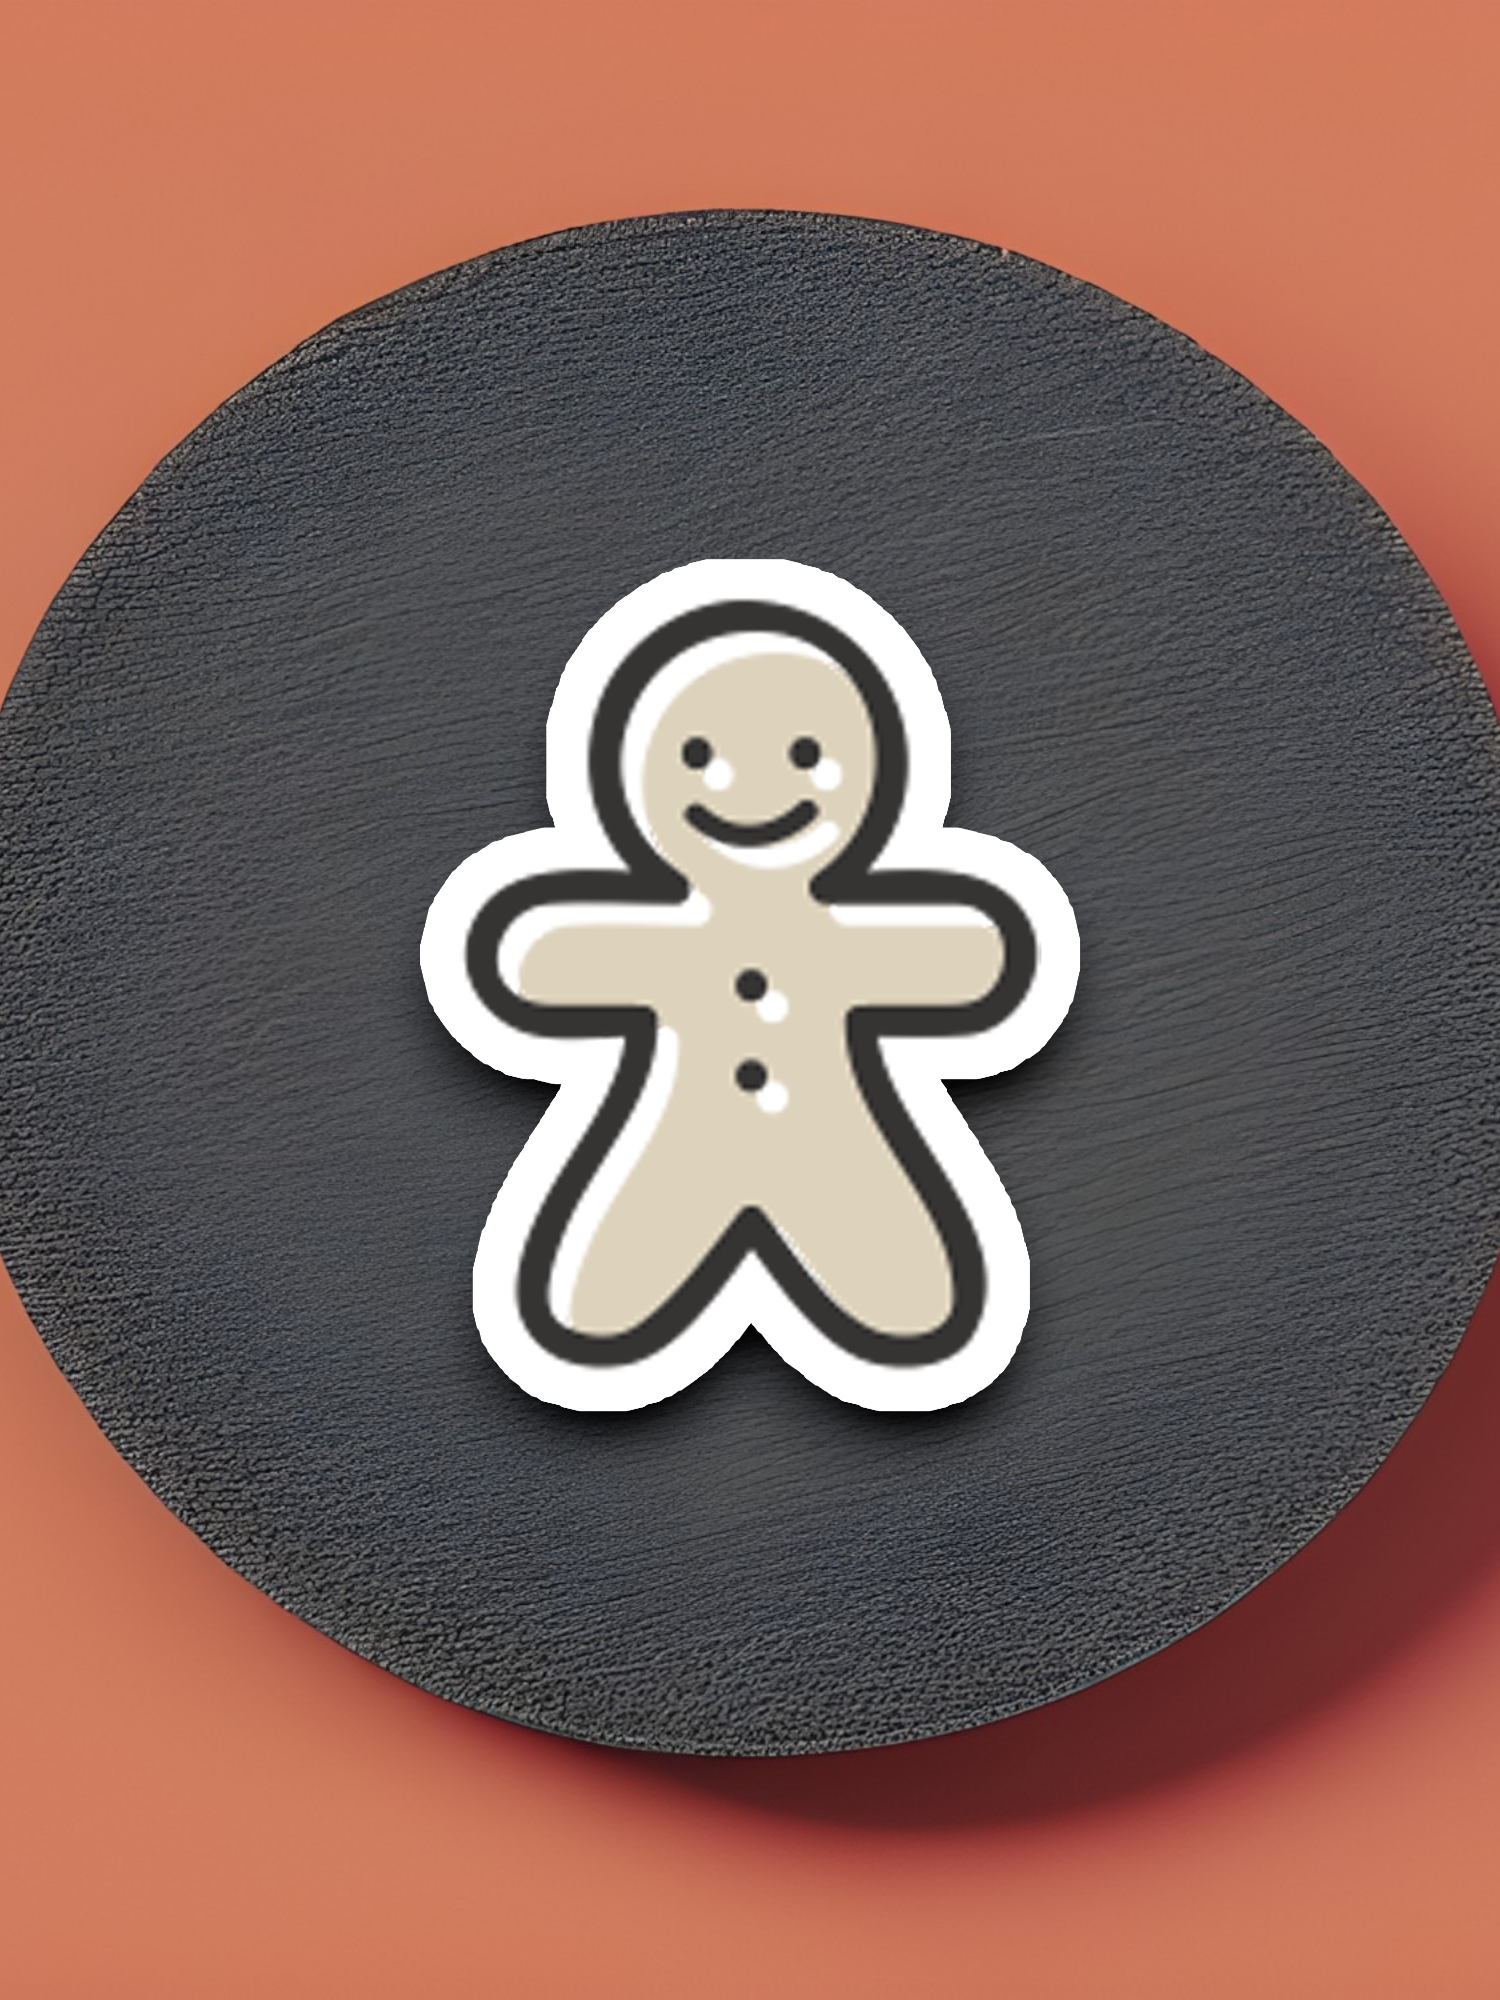 Christmas Gingerbread Man Sticker